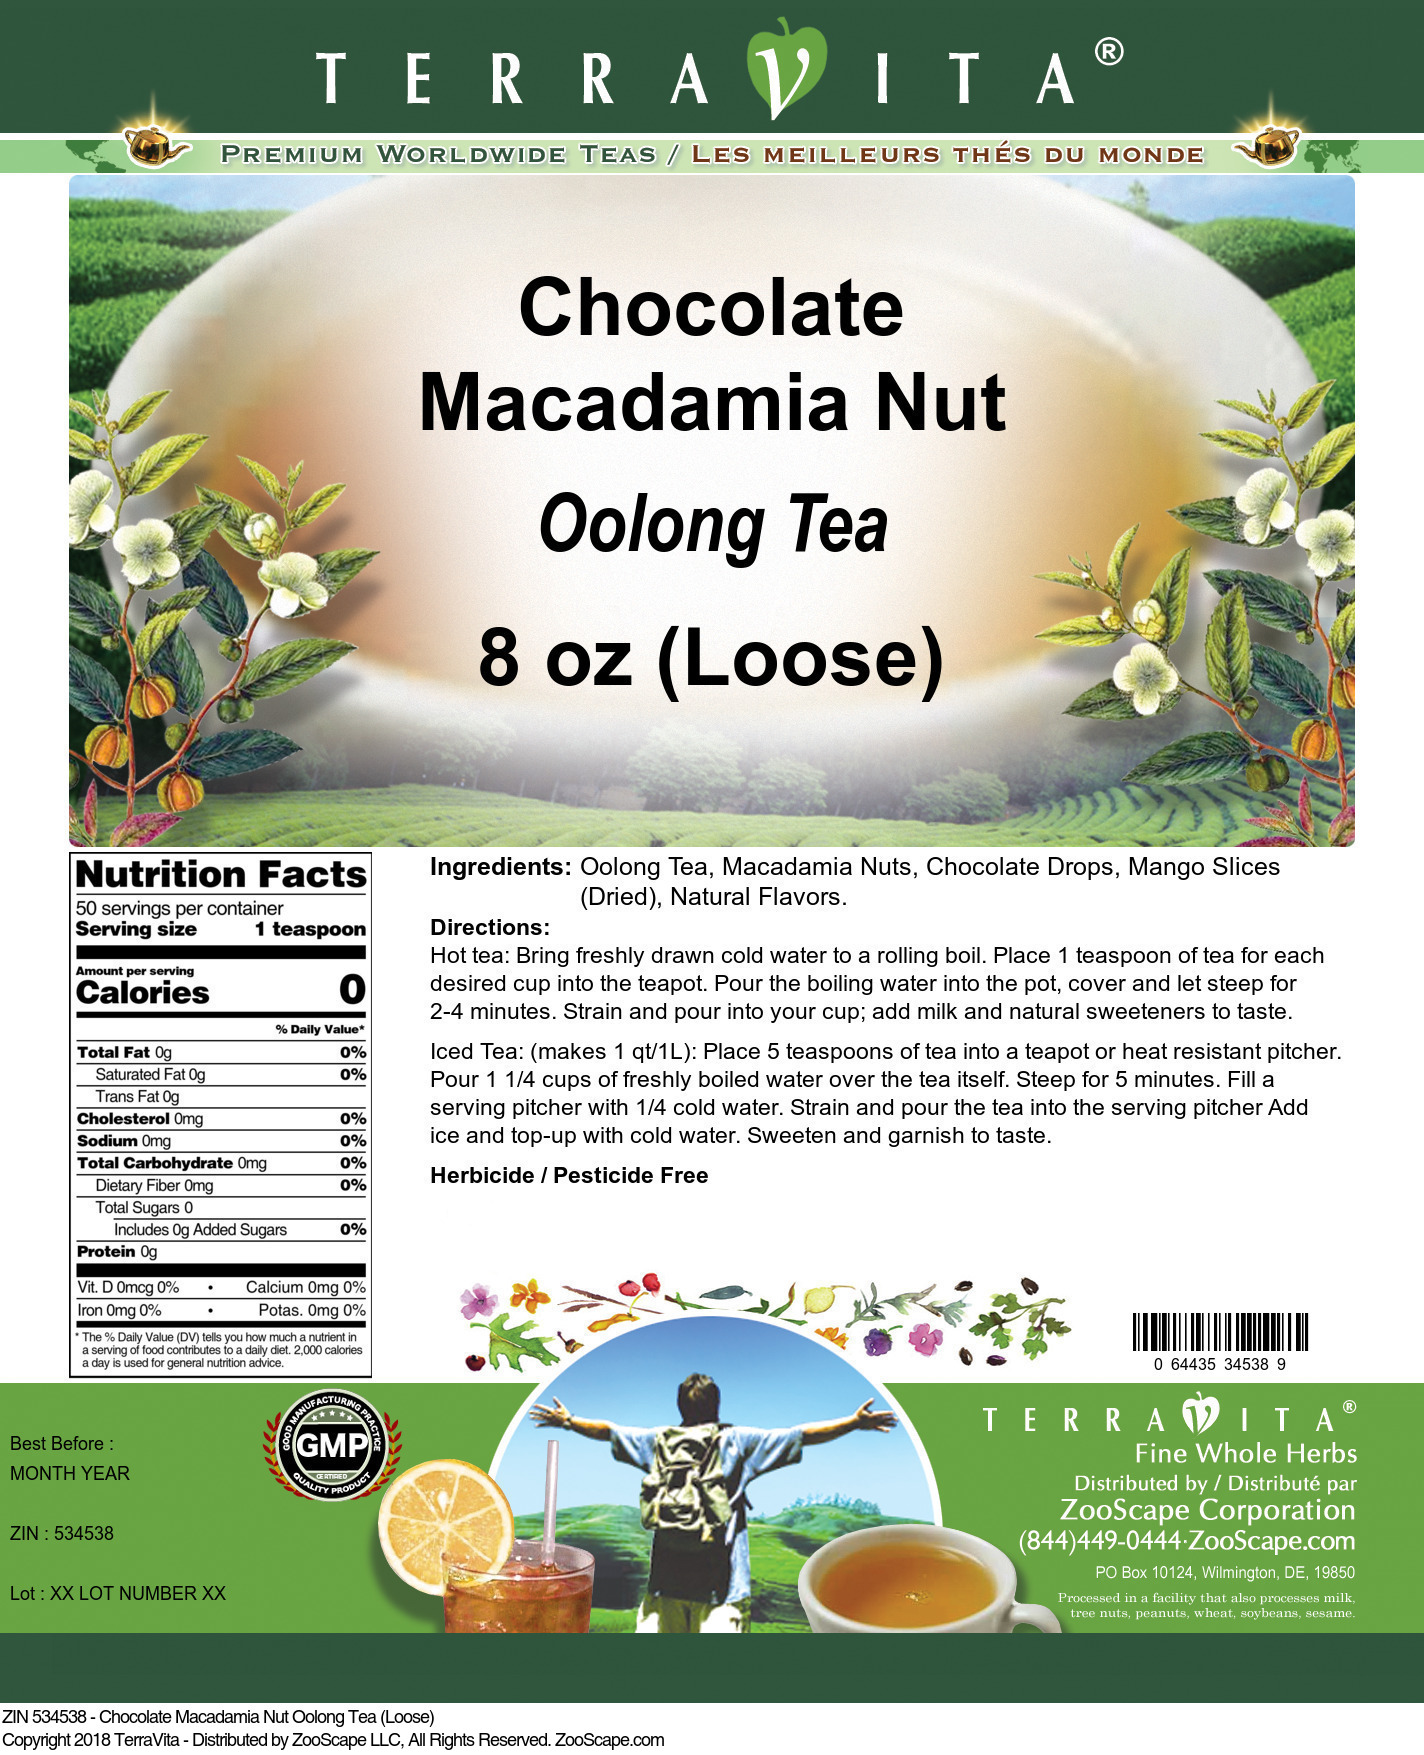 Chocolate Macadamia Nut Oolong Tea (Loose) - Label